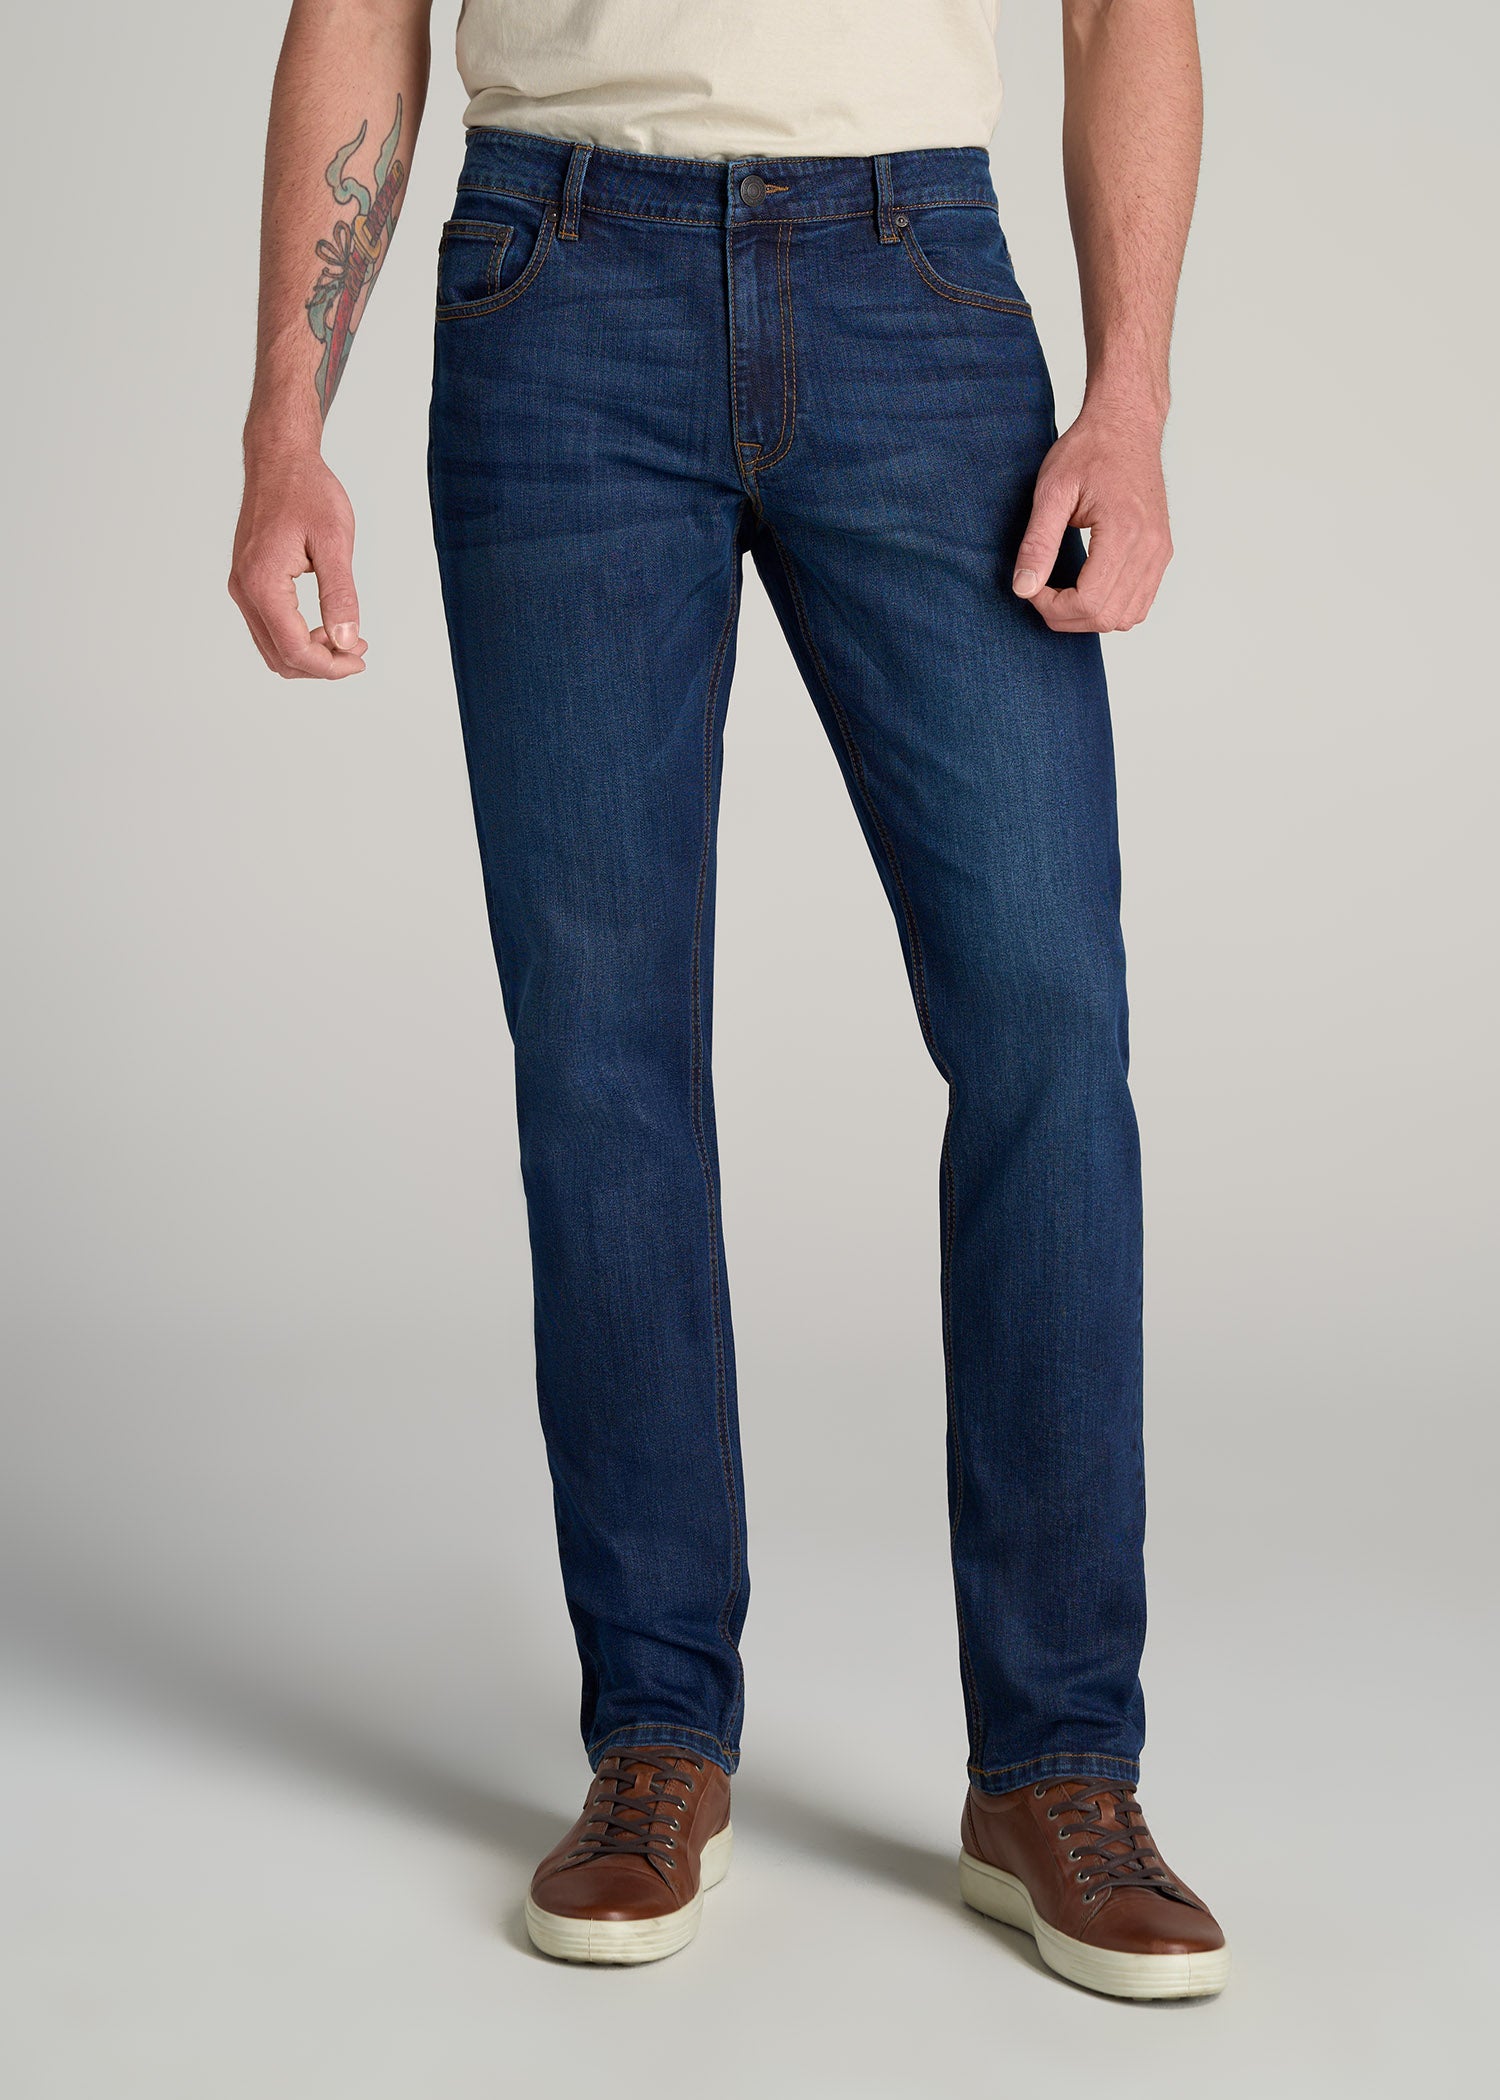 – Carman Men\'s Charger Blue Slim Fit Slim Jeans: Jeans Taper Taper Tall American